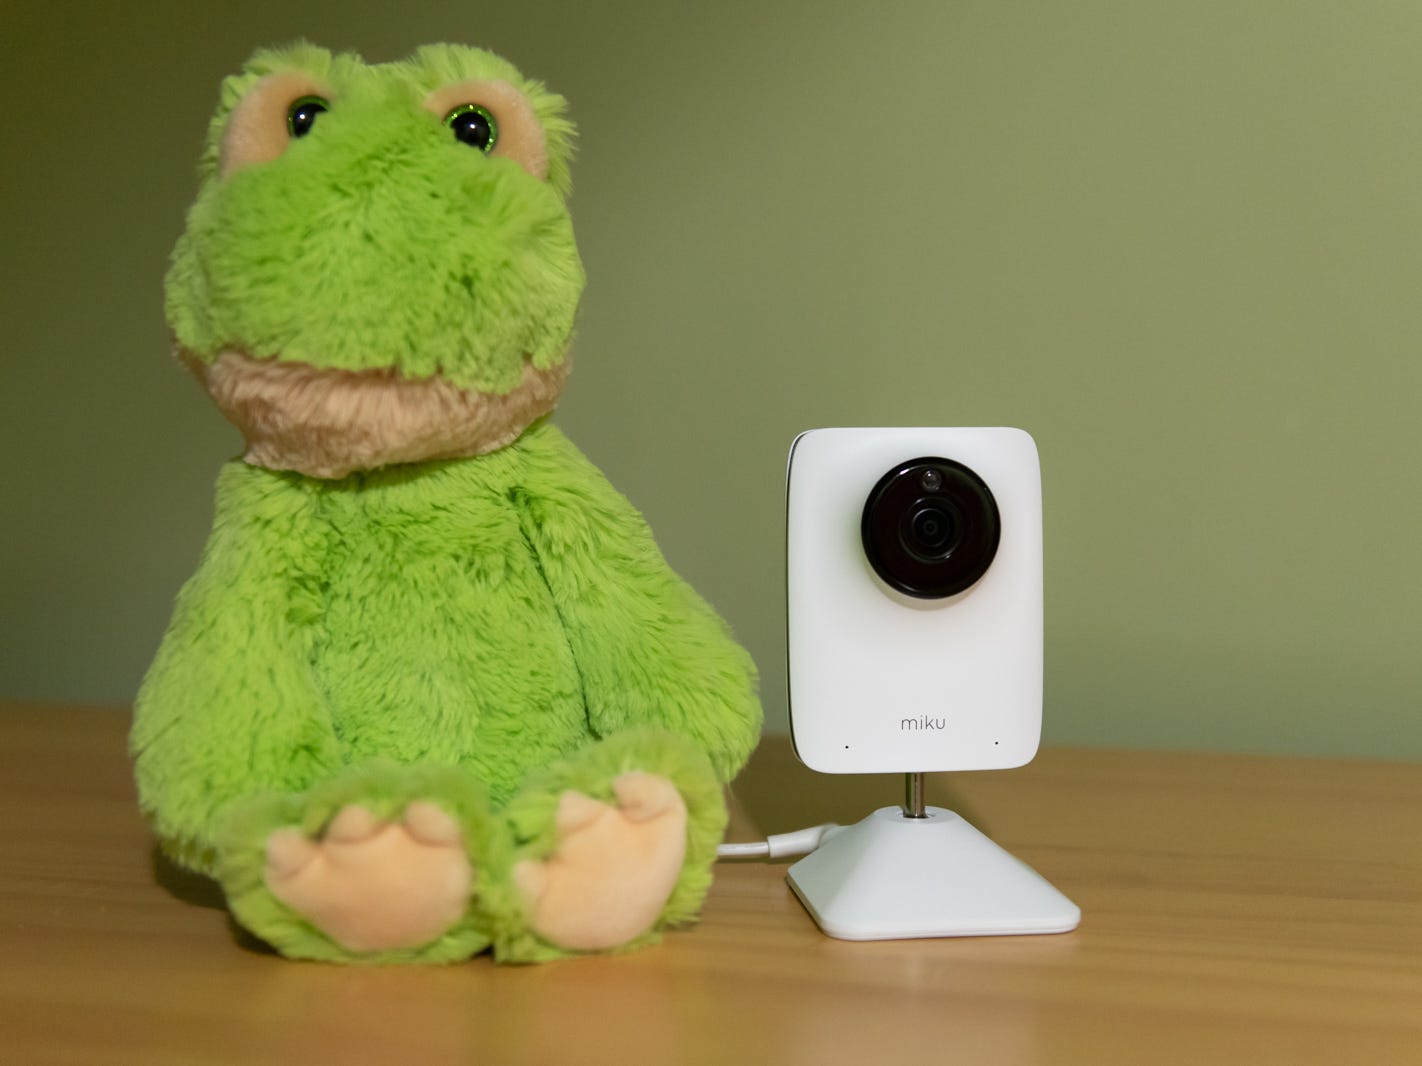 miku smart baby monitor on a dresser beside a green stuffed frog toy